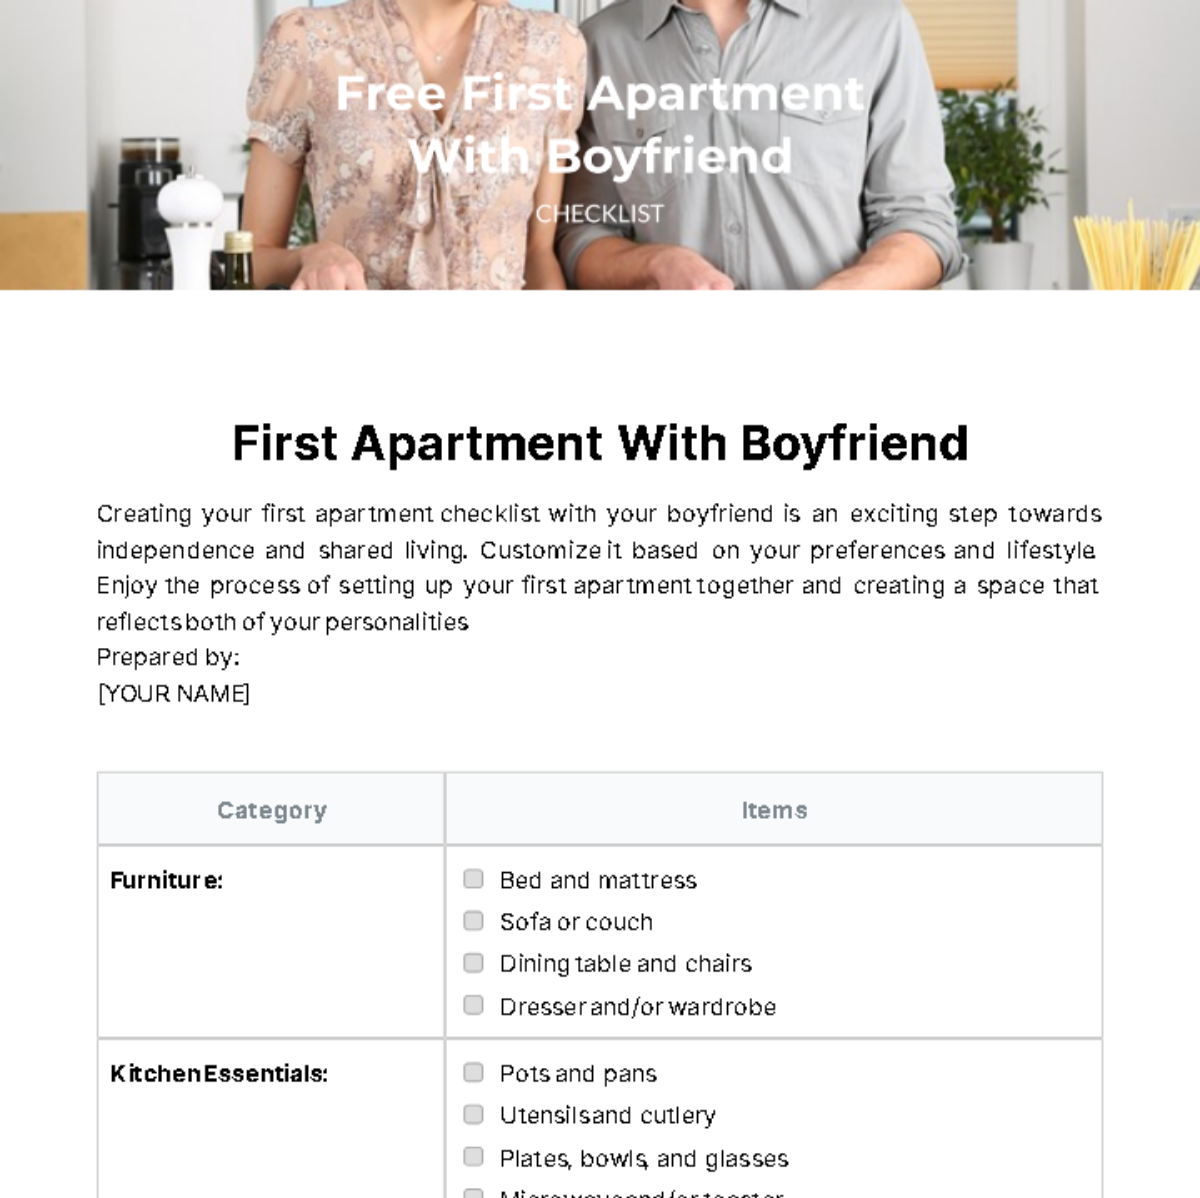 Free First Apartment With Boyfriend Checklist Template